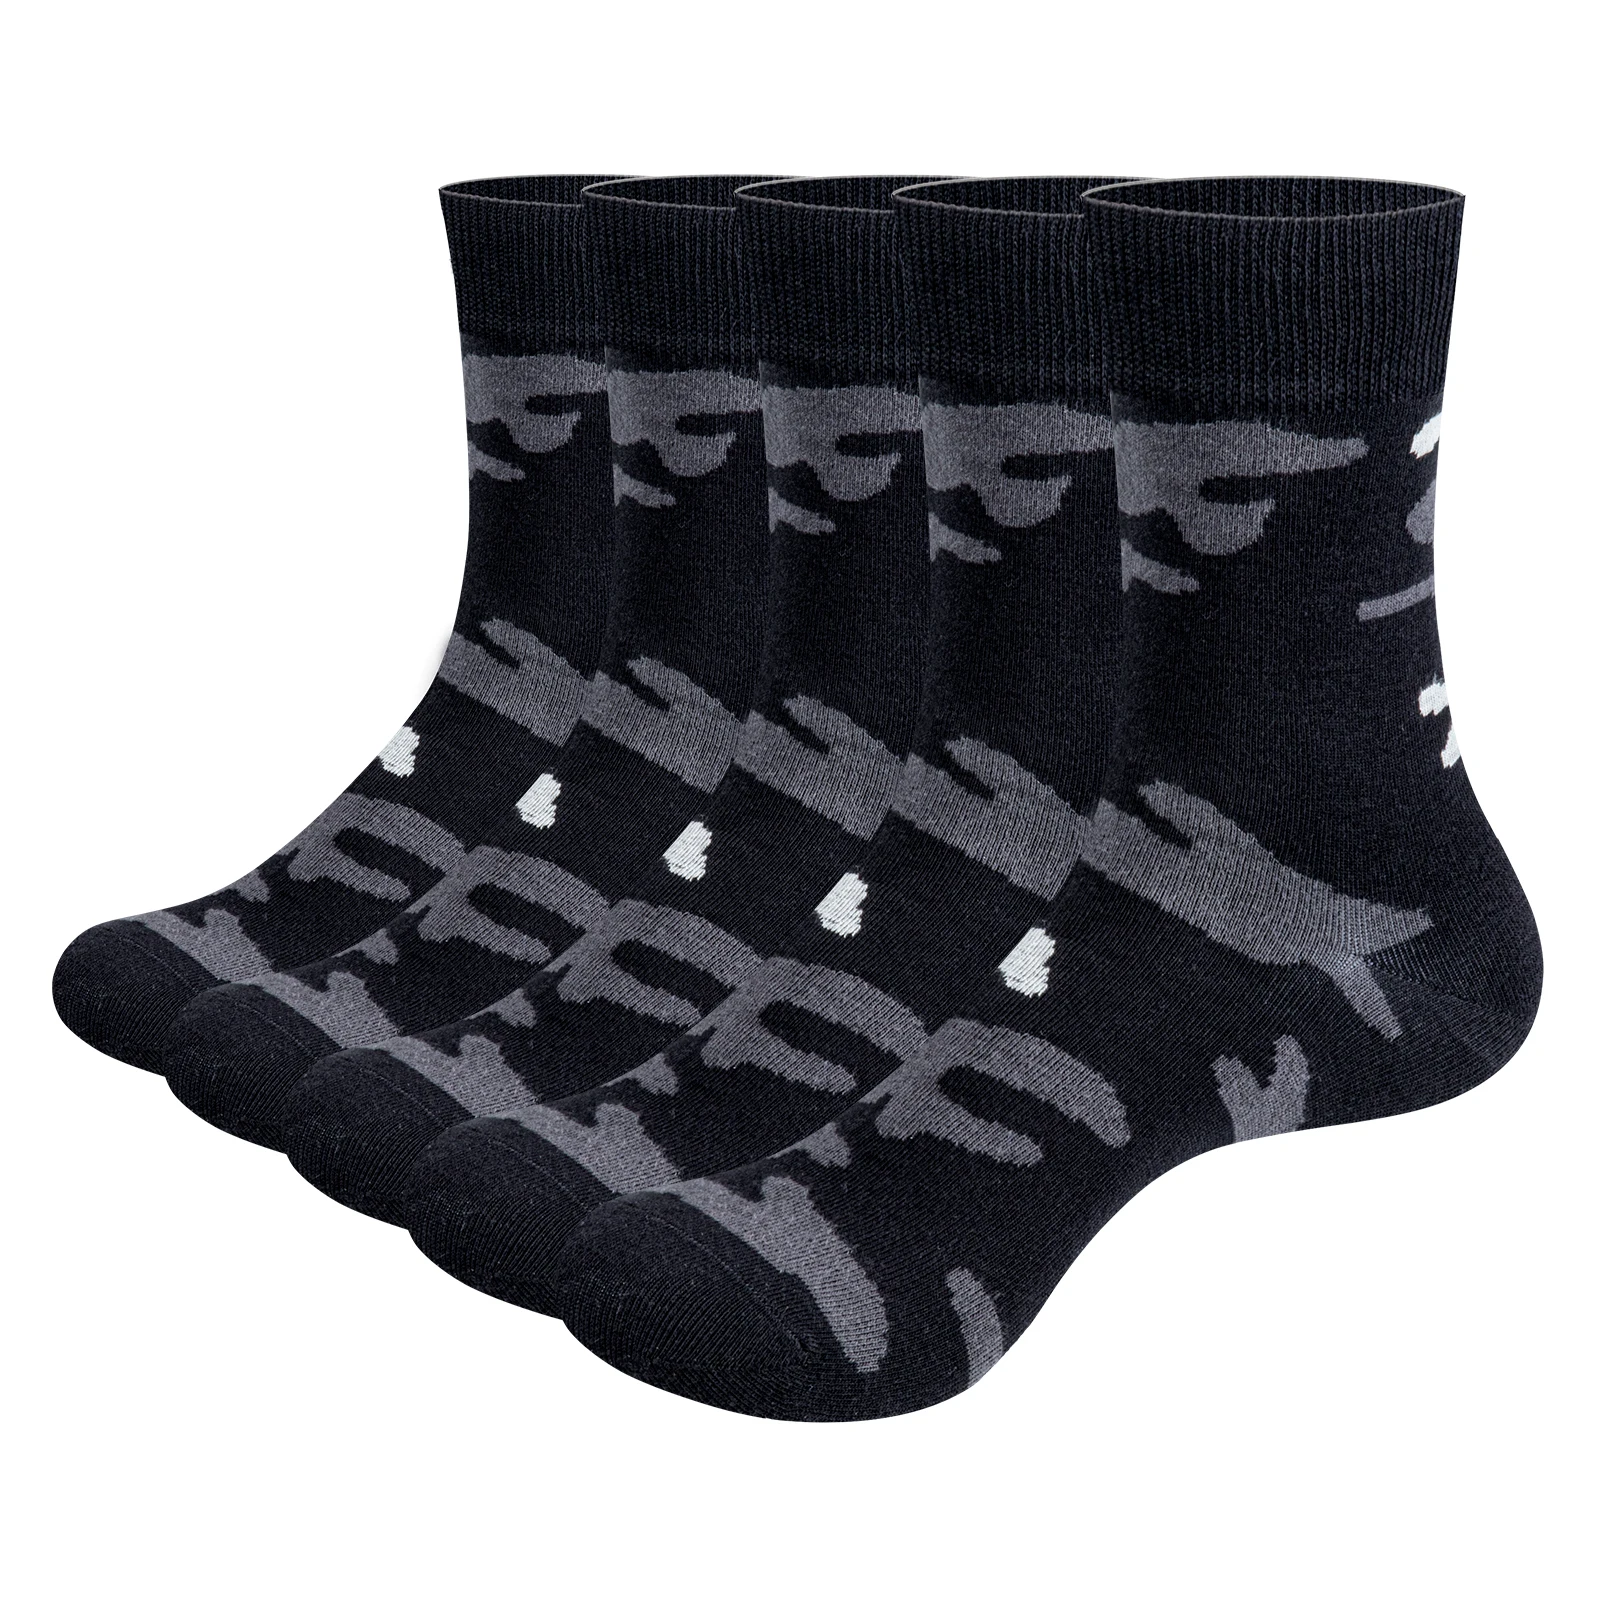 

YUEDGE Mens Camo Dress Socks Fancy Patterned Casual Funny Socks Cotton Funky Design Fun Socks Size 37-46, 5 Pairs